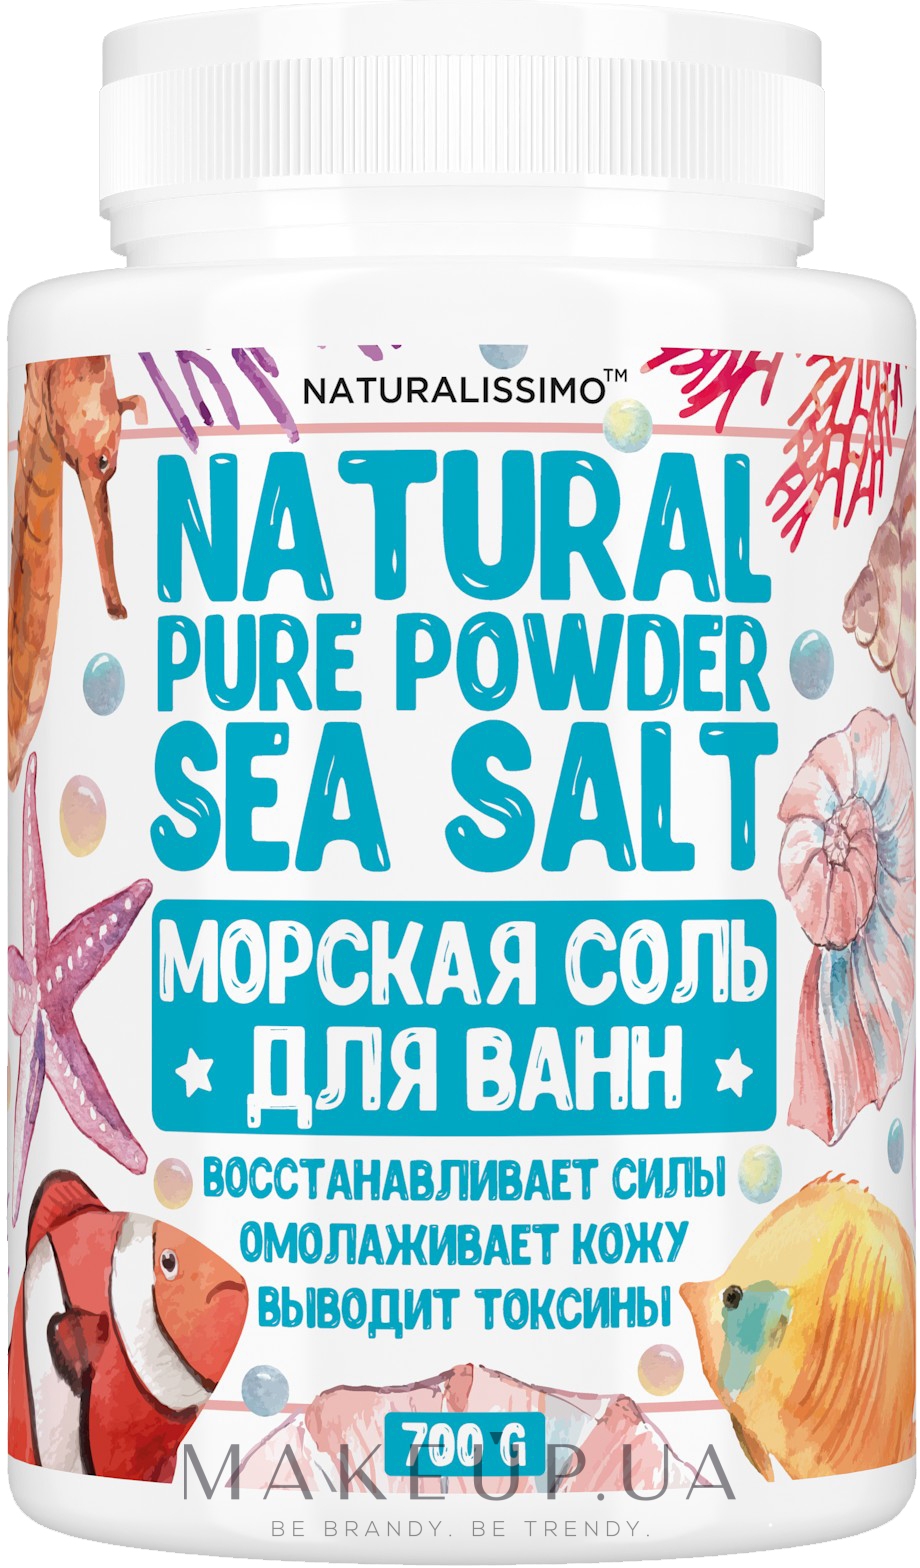 Натуральная пудра морской соли для ванн - Naturalissimo Natural Pure Powder Sea Salt — фото 700g